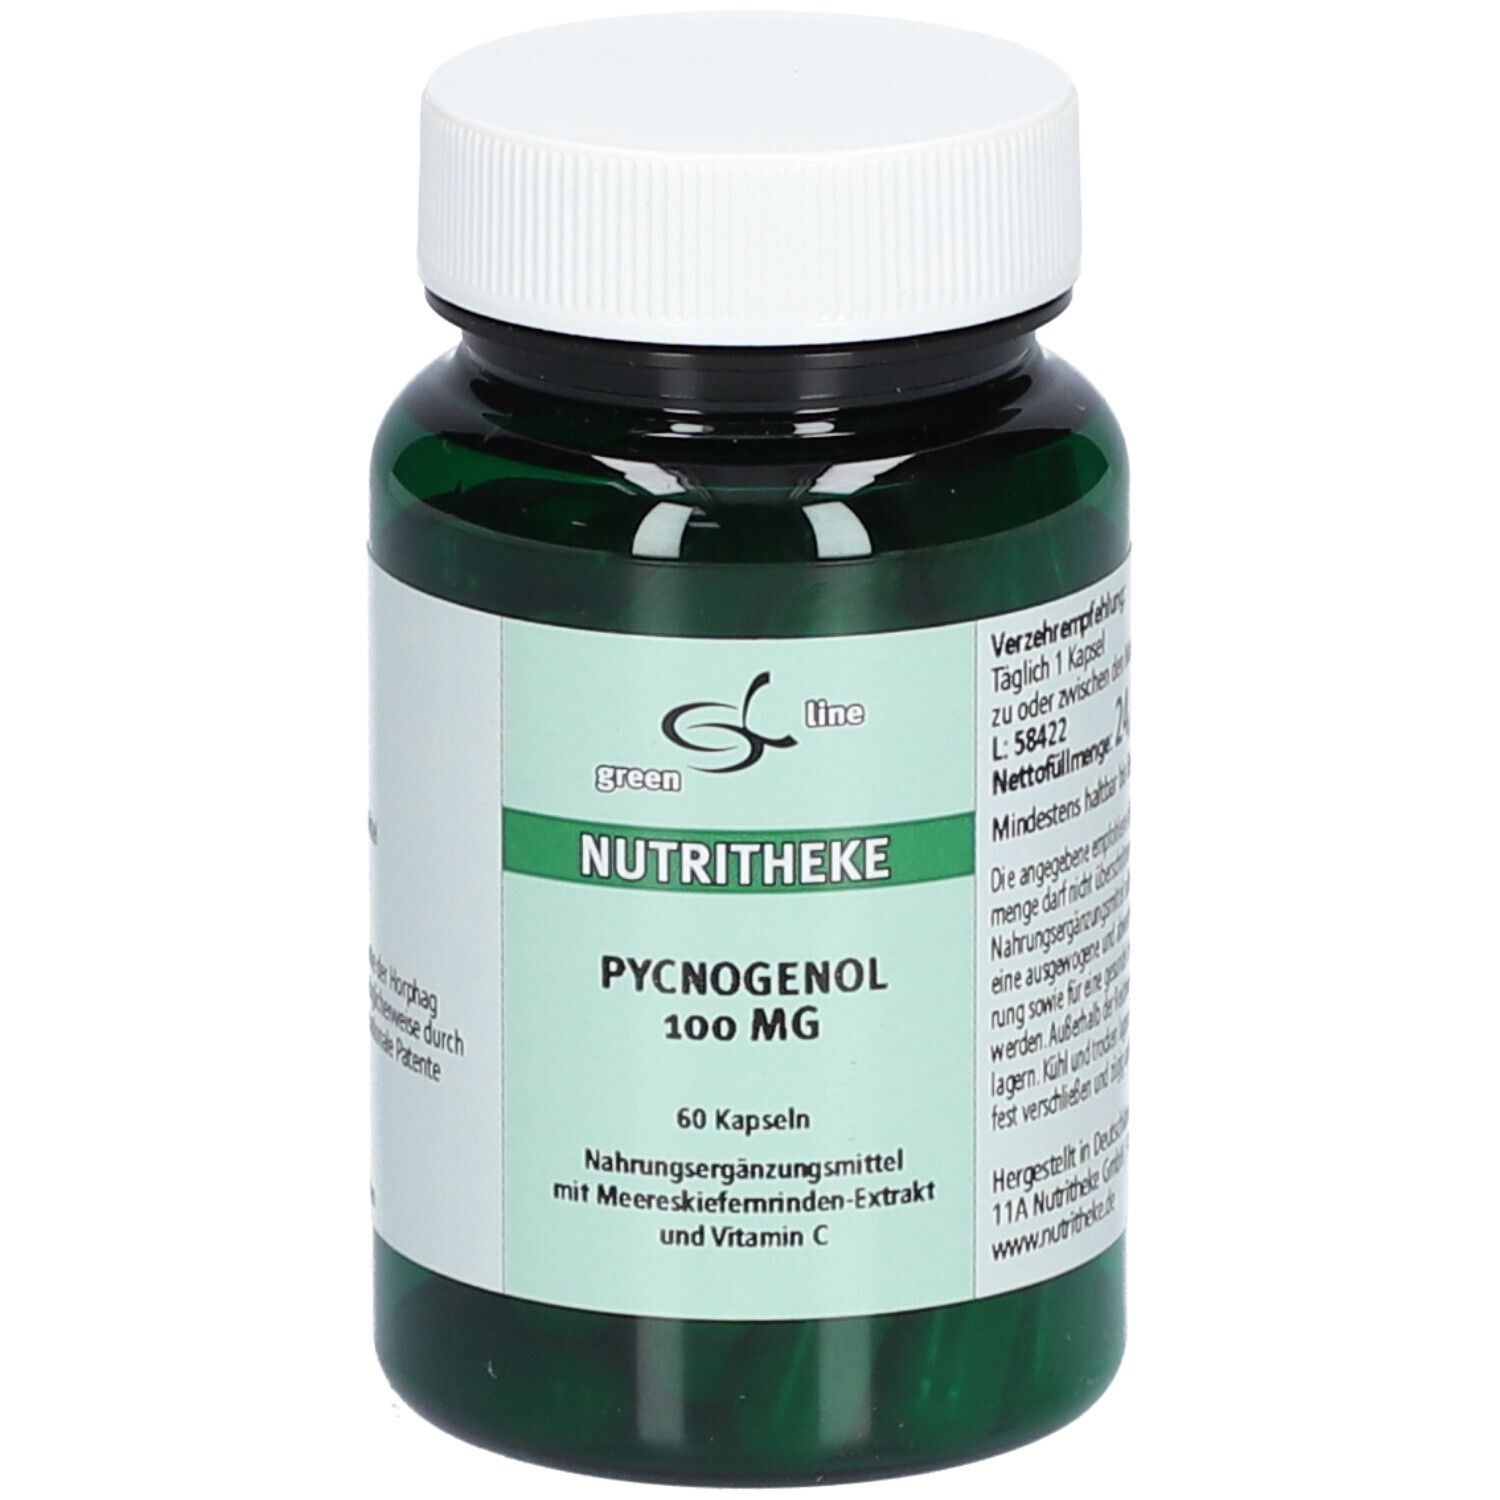 Image of green line PYCNOGENOL 100 mg